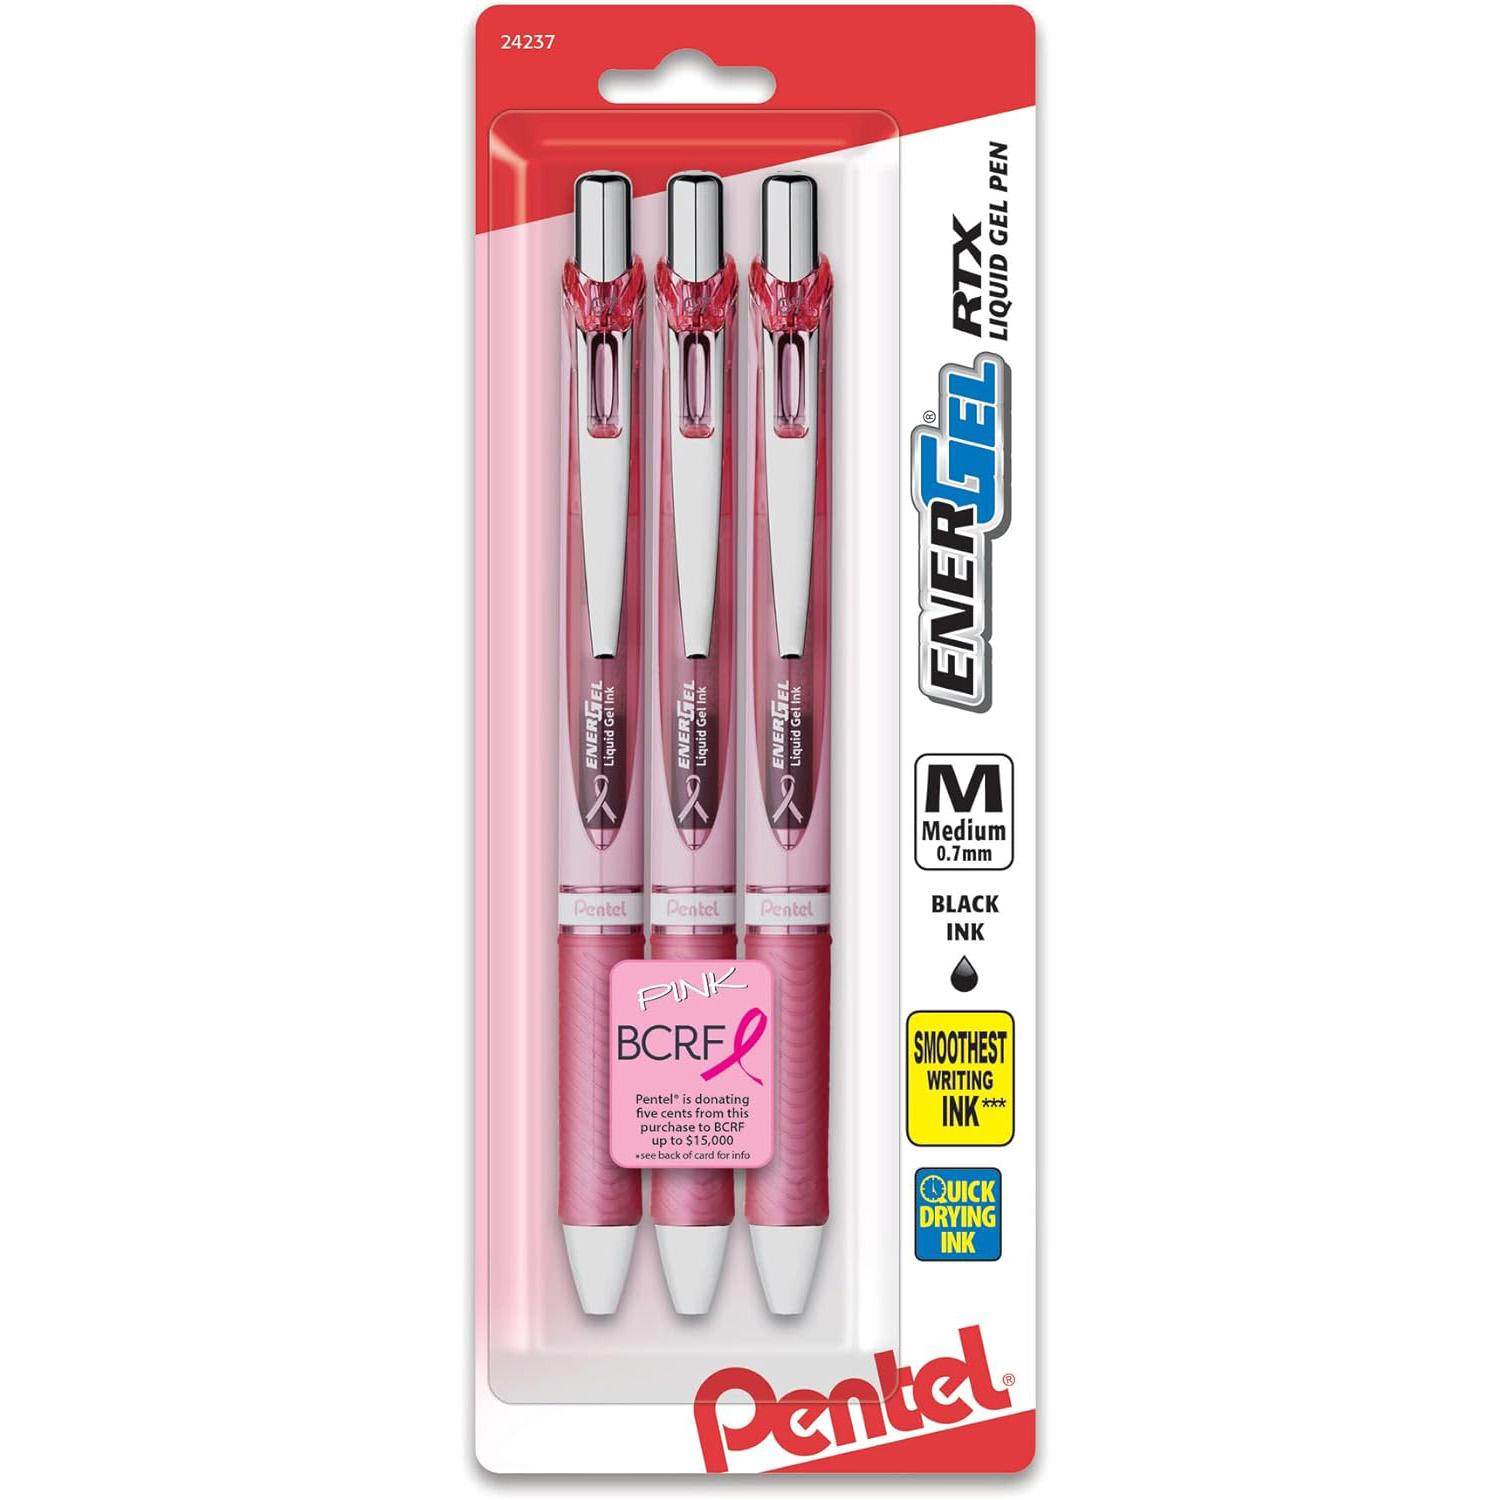 Pentel EnerGel RTX Retractable Liquid Gel Pens 3 Pack for $3.79